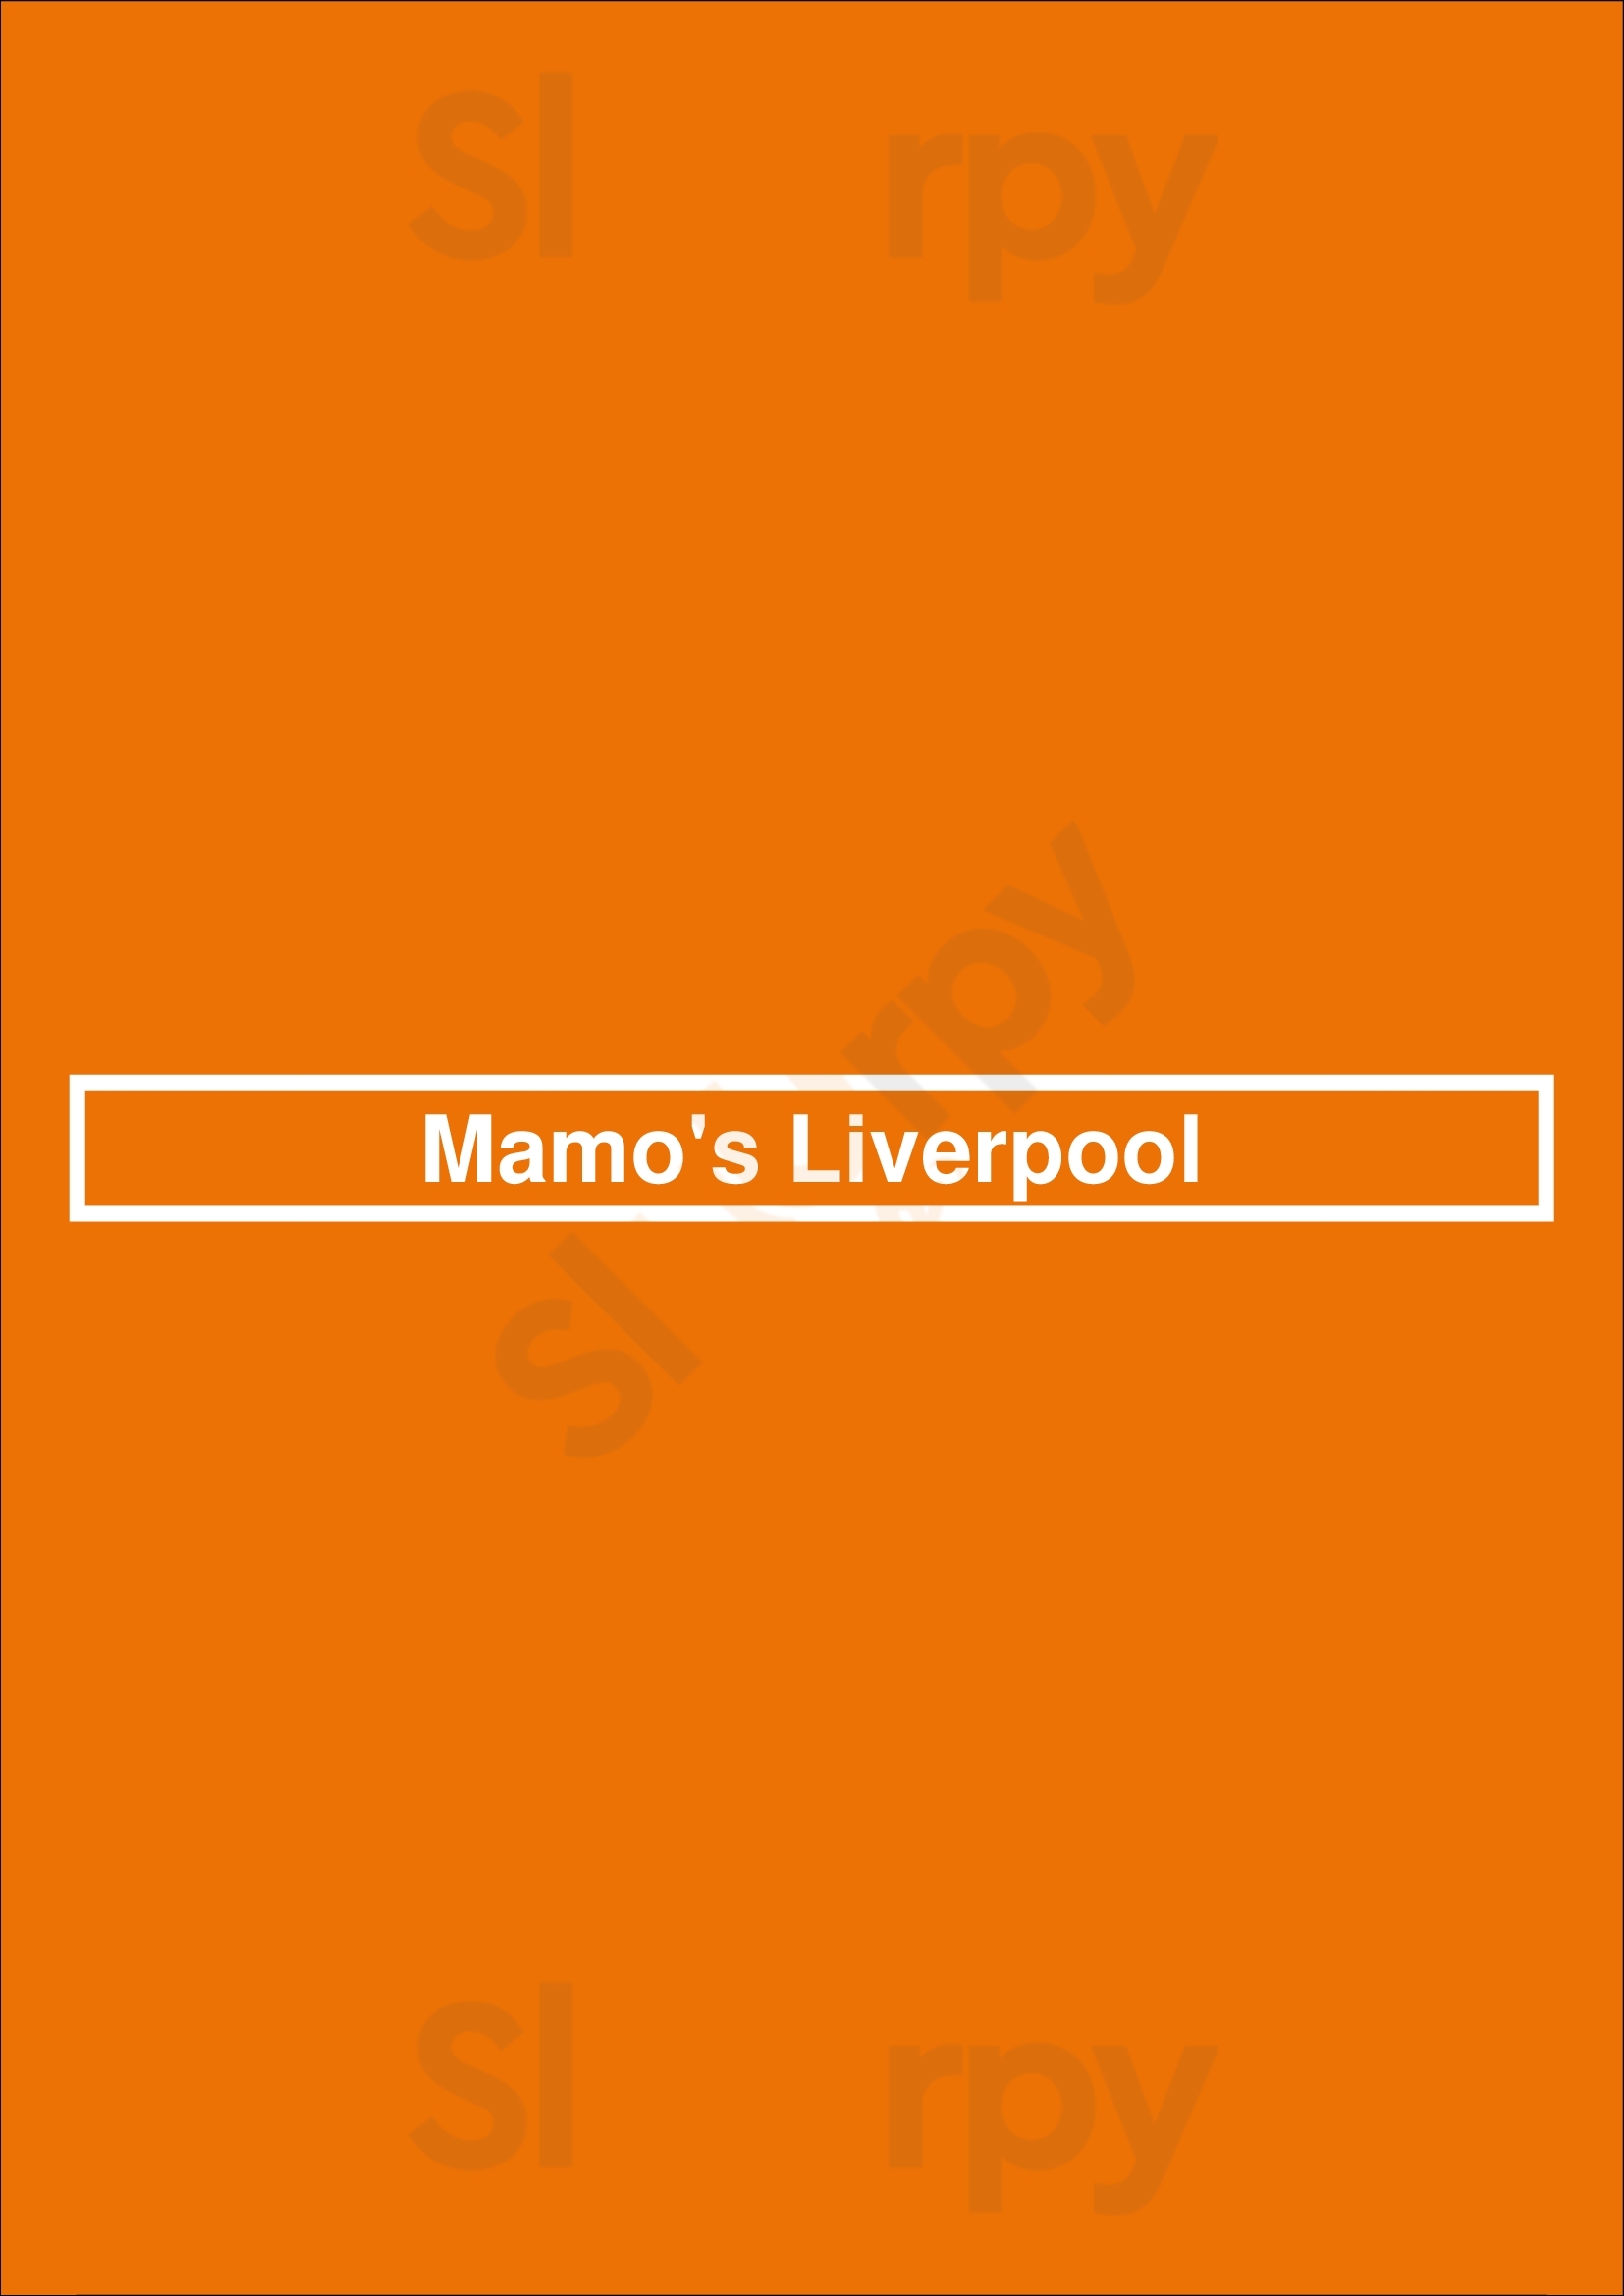 Mamo's Rose Lane Liverpool Menu - 1